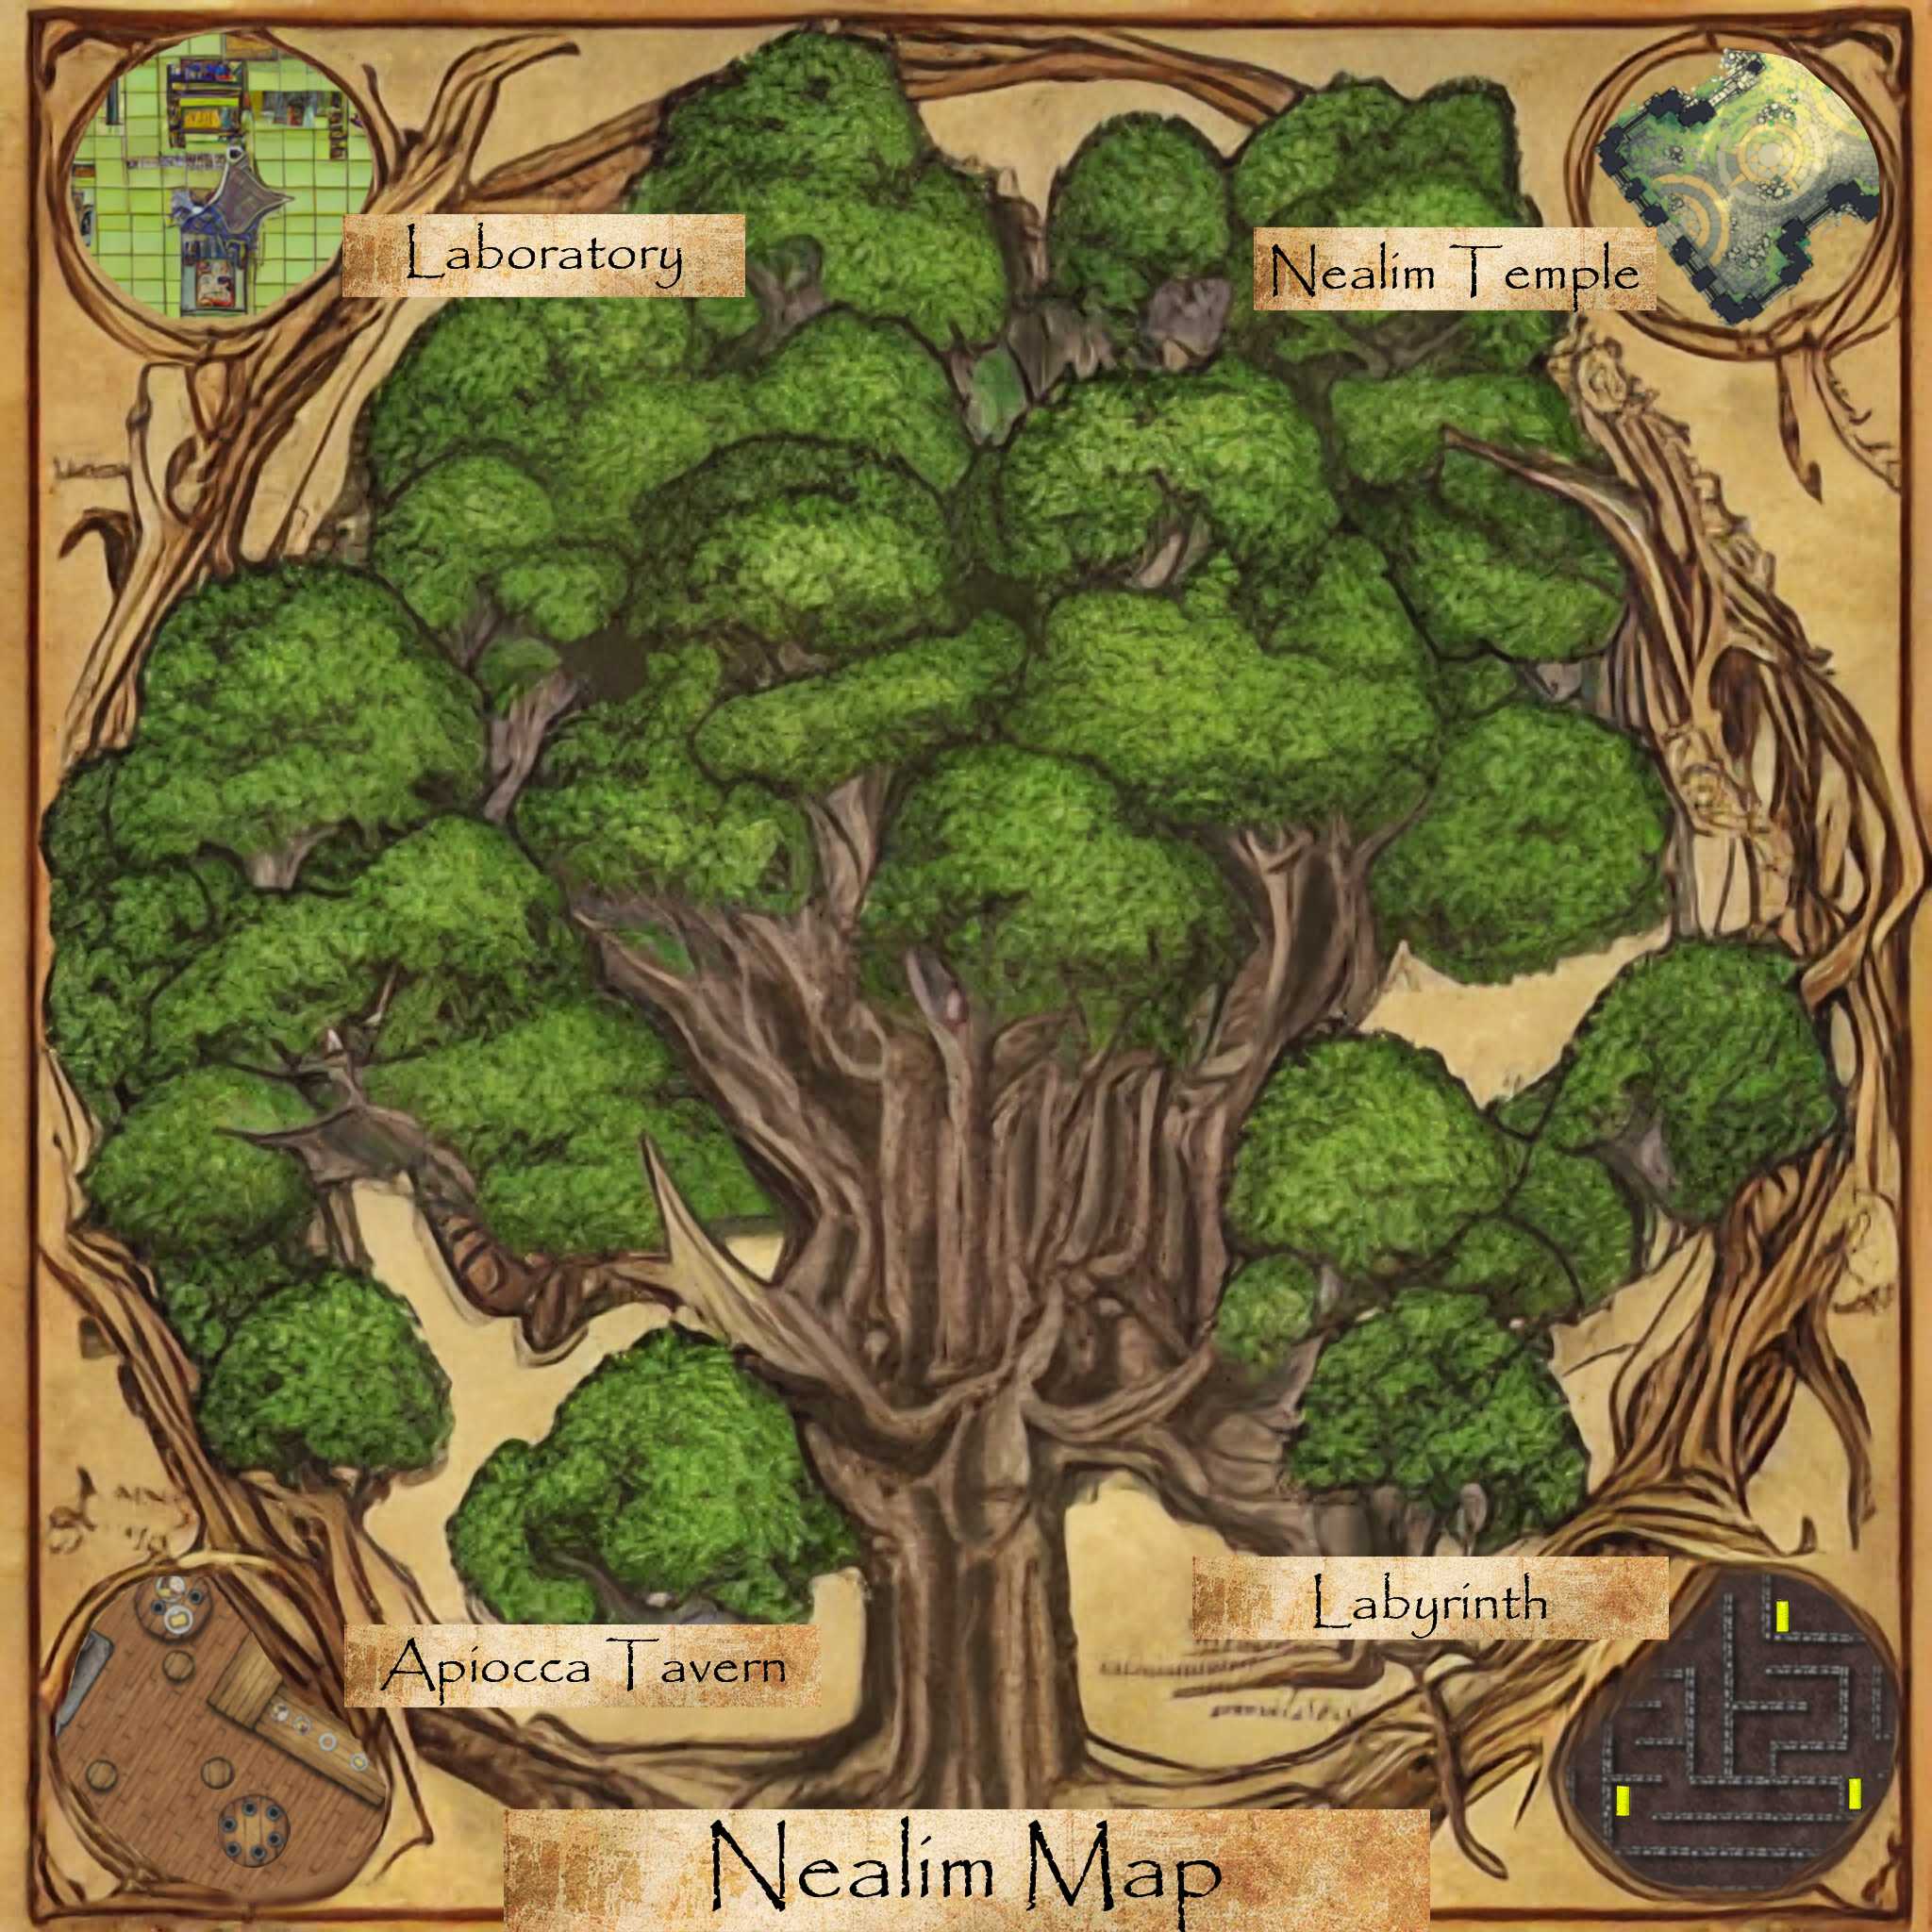 MAP OF NEALIM